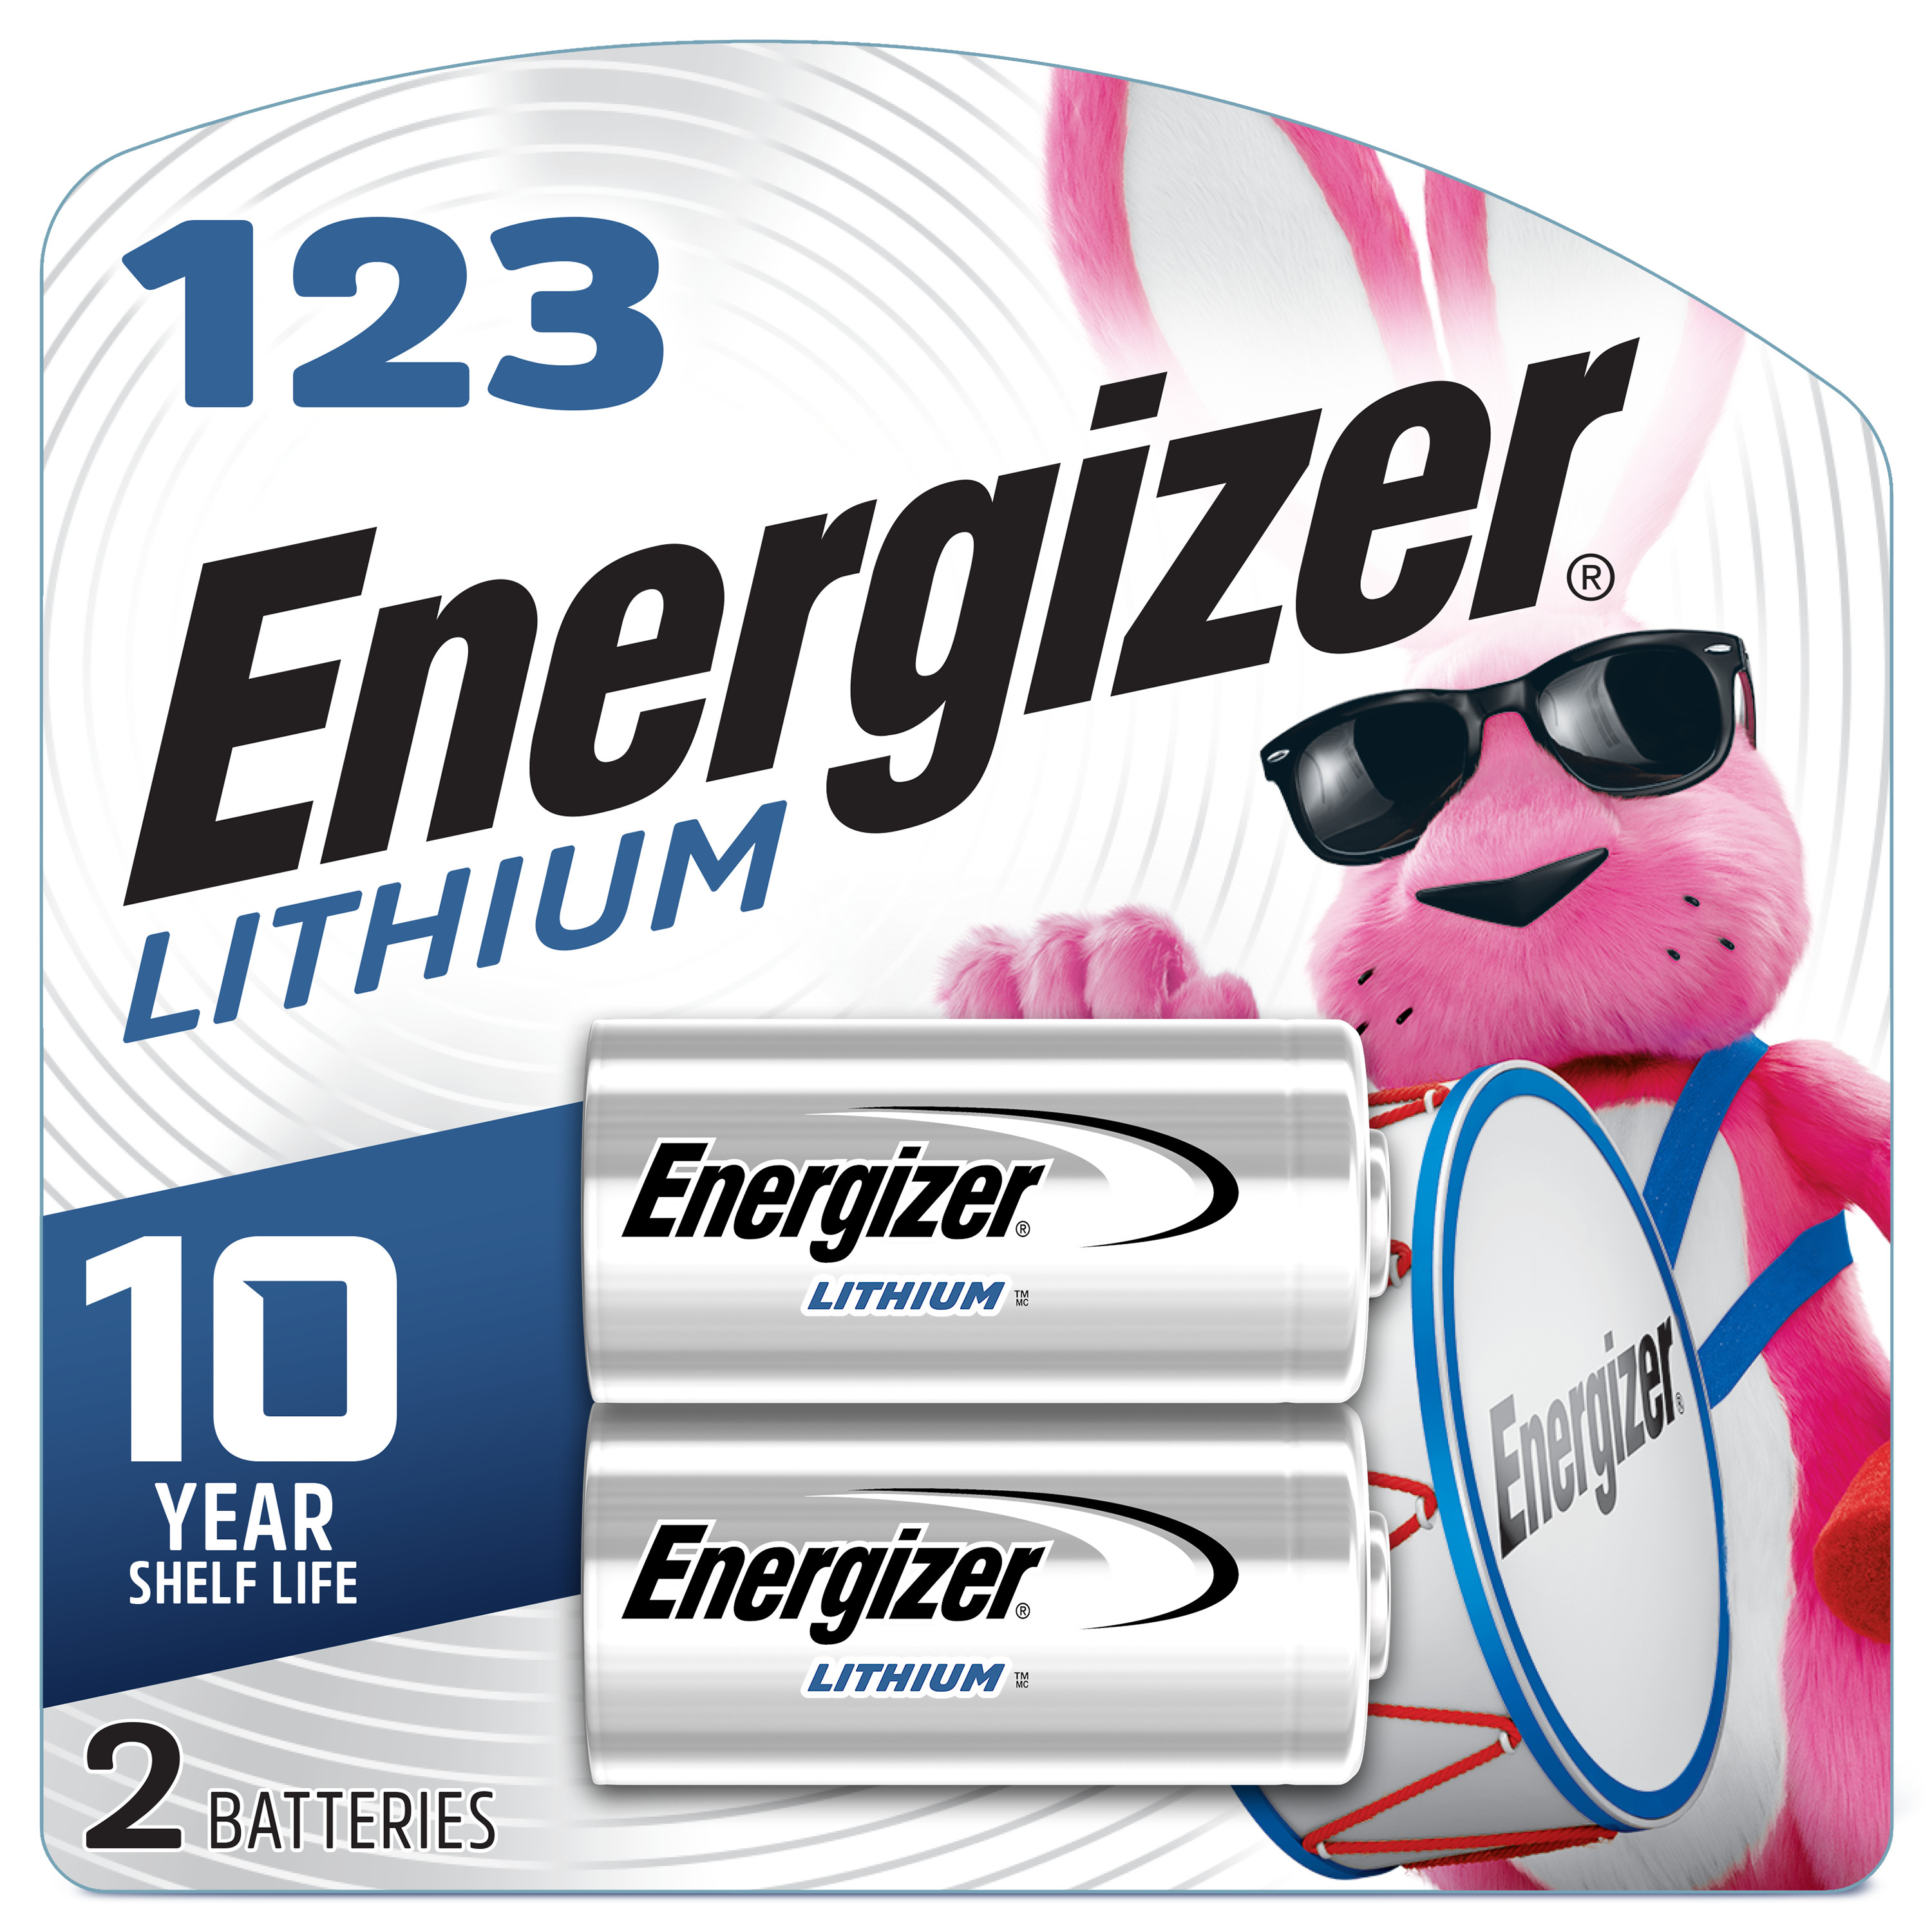 Energizer 123 Lithium Batteries (2 Pack), 3V Photo Batteries - image 1 of 12